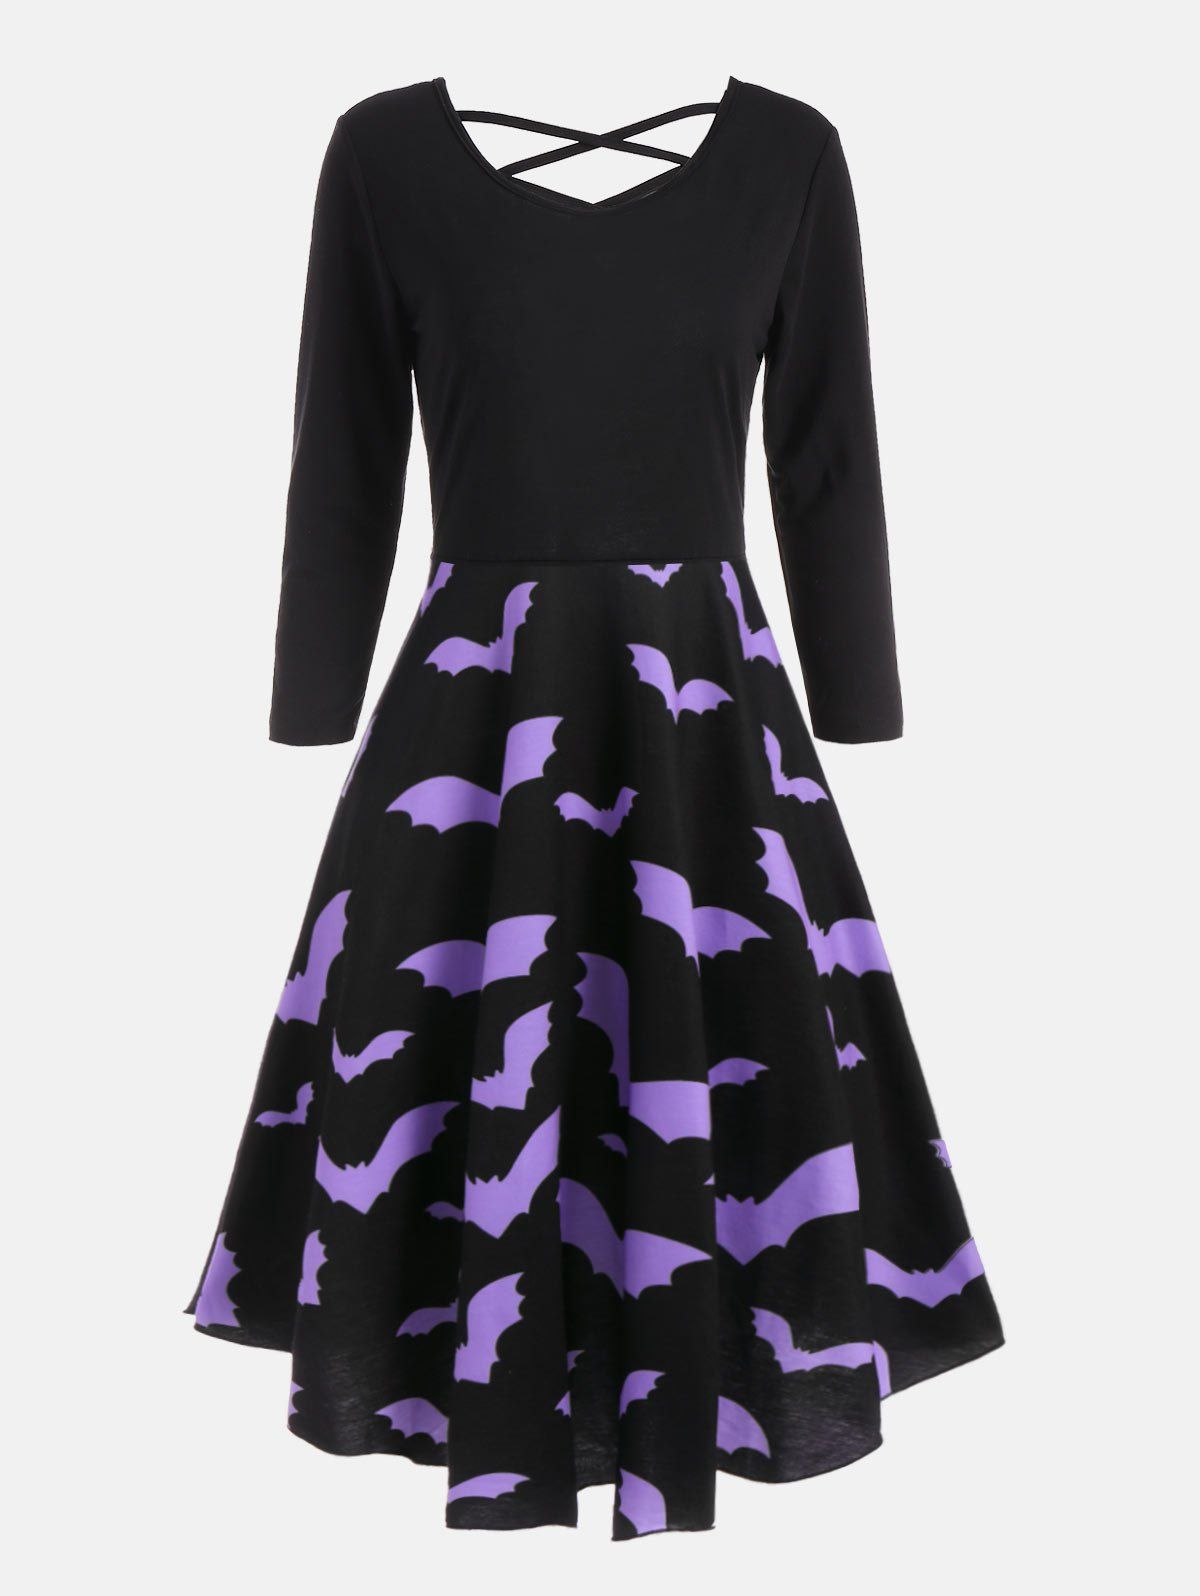 Cross Back Bat Print Fit and Flare Dress - BLACK XL